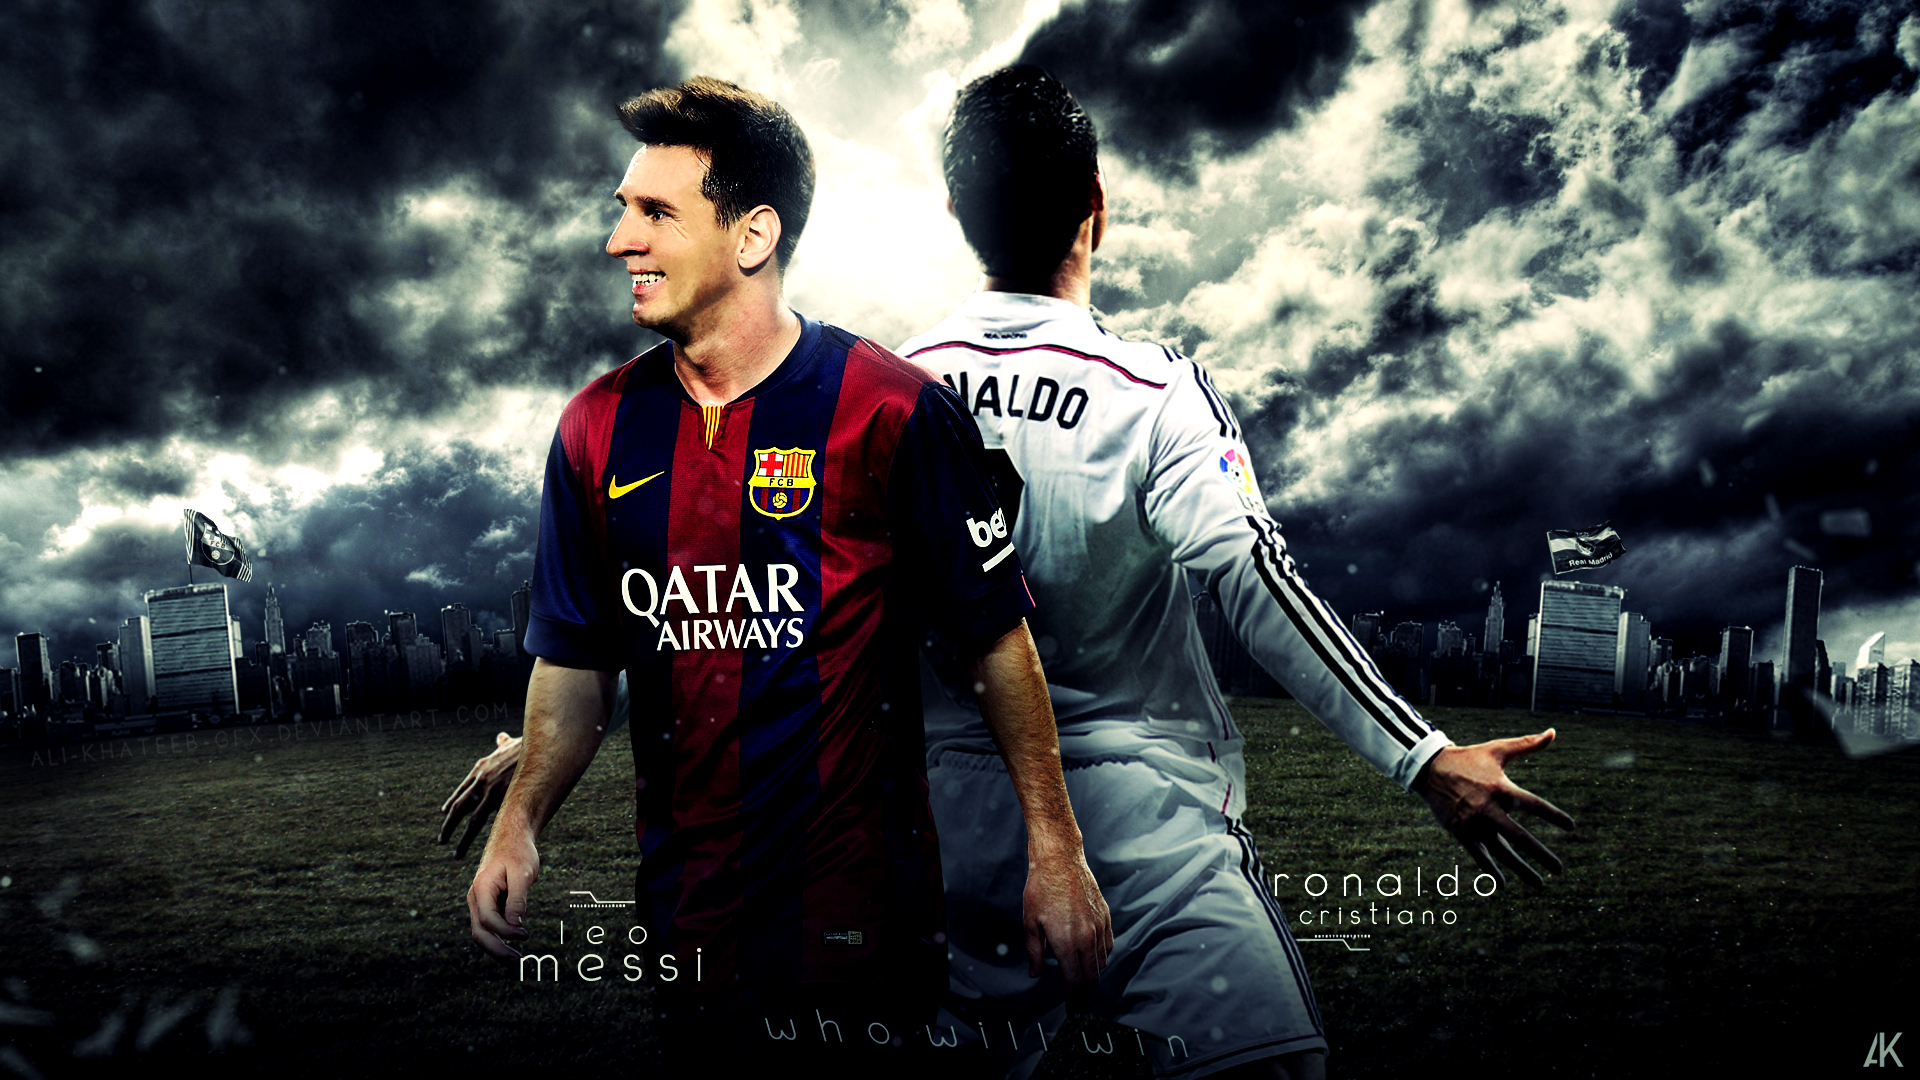 Ronaldo vs Messi wallpaper  Cristiano Ronaldo Wallpapers  Ronaldo  wallpapers Messi vs ronaldo Messi and ronaldo